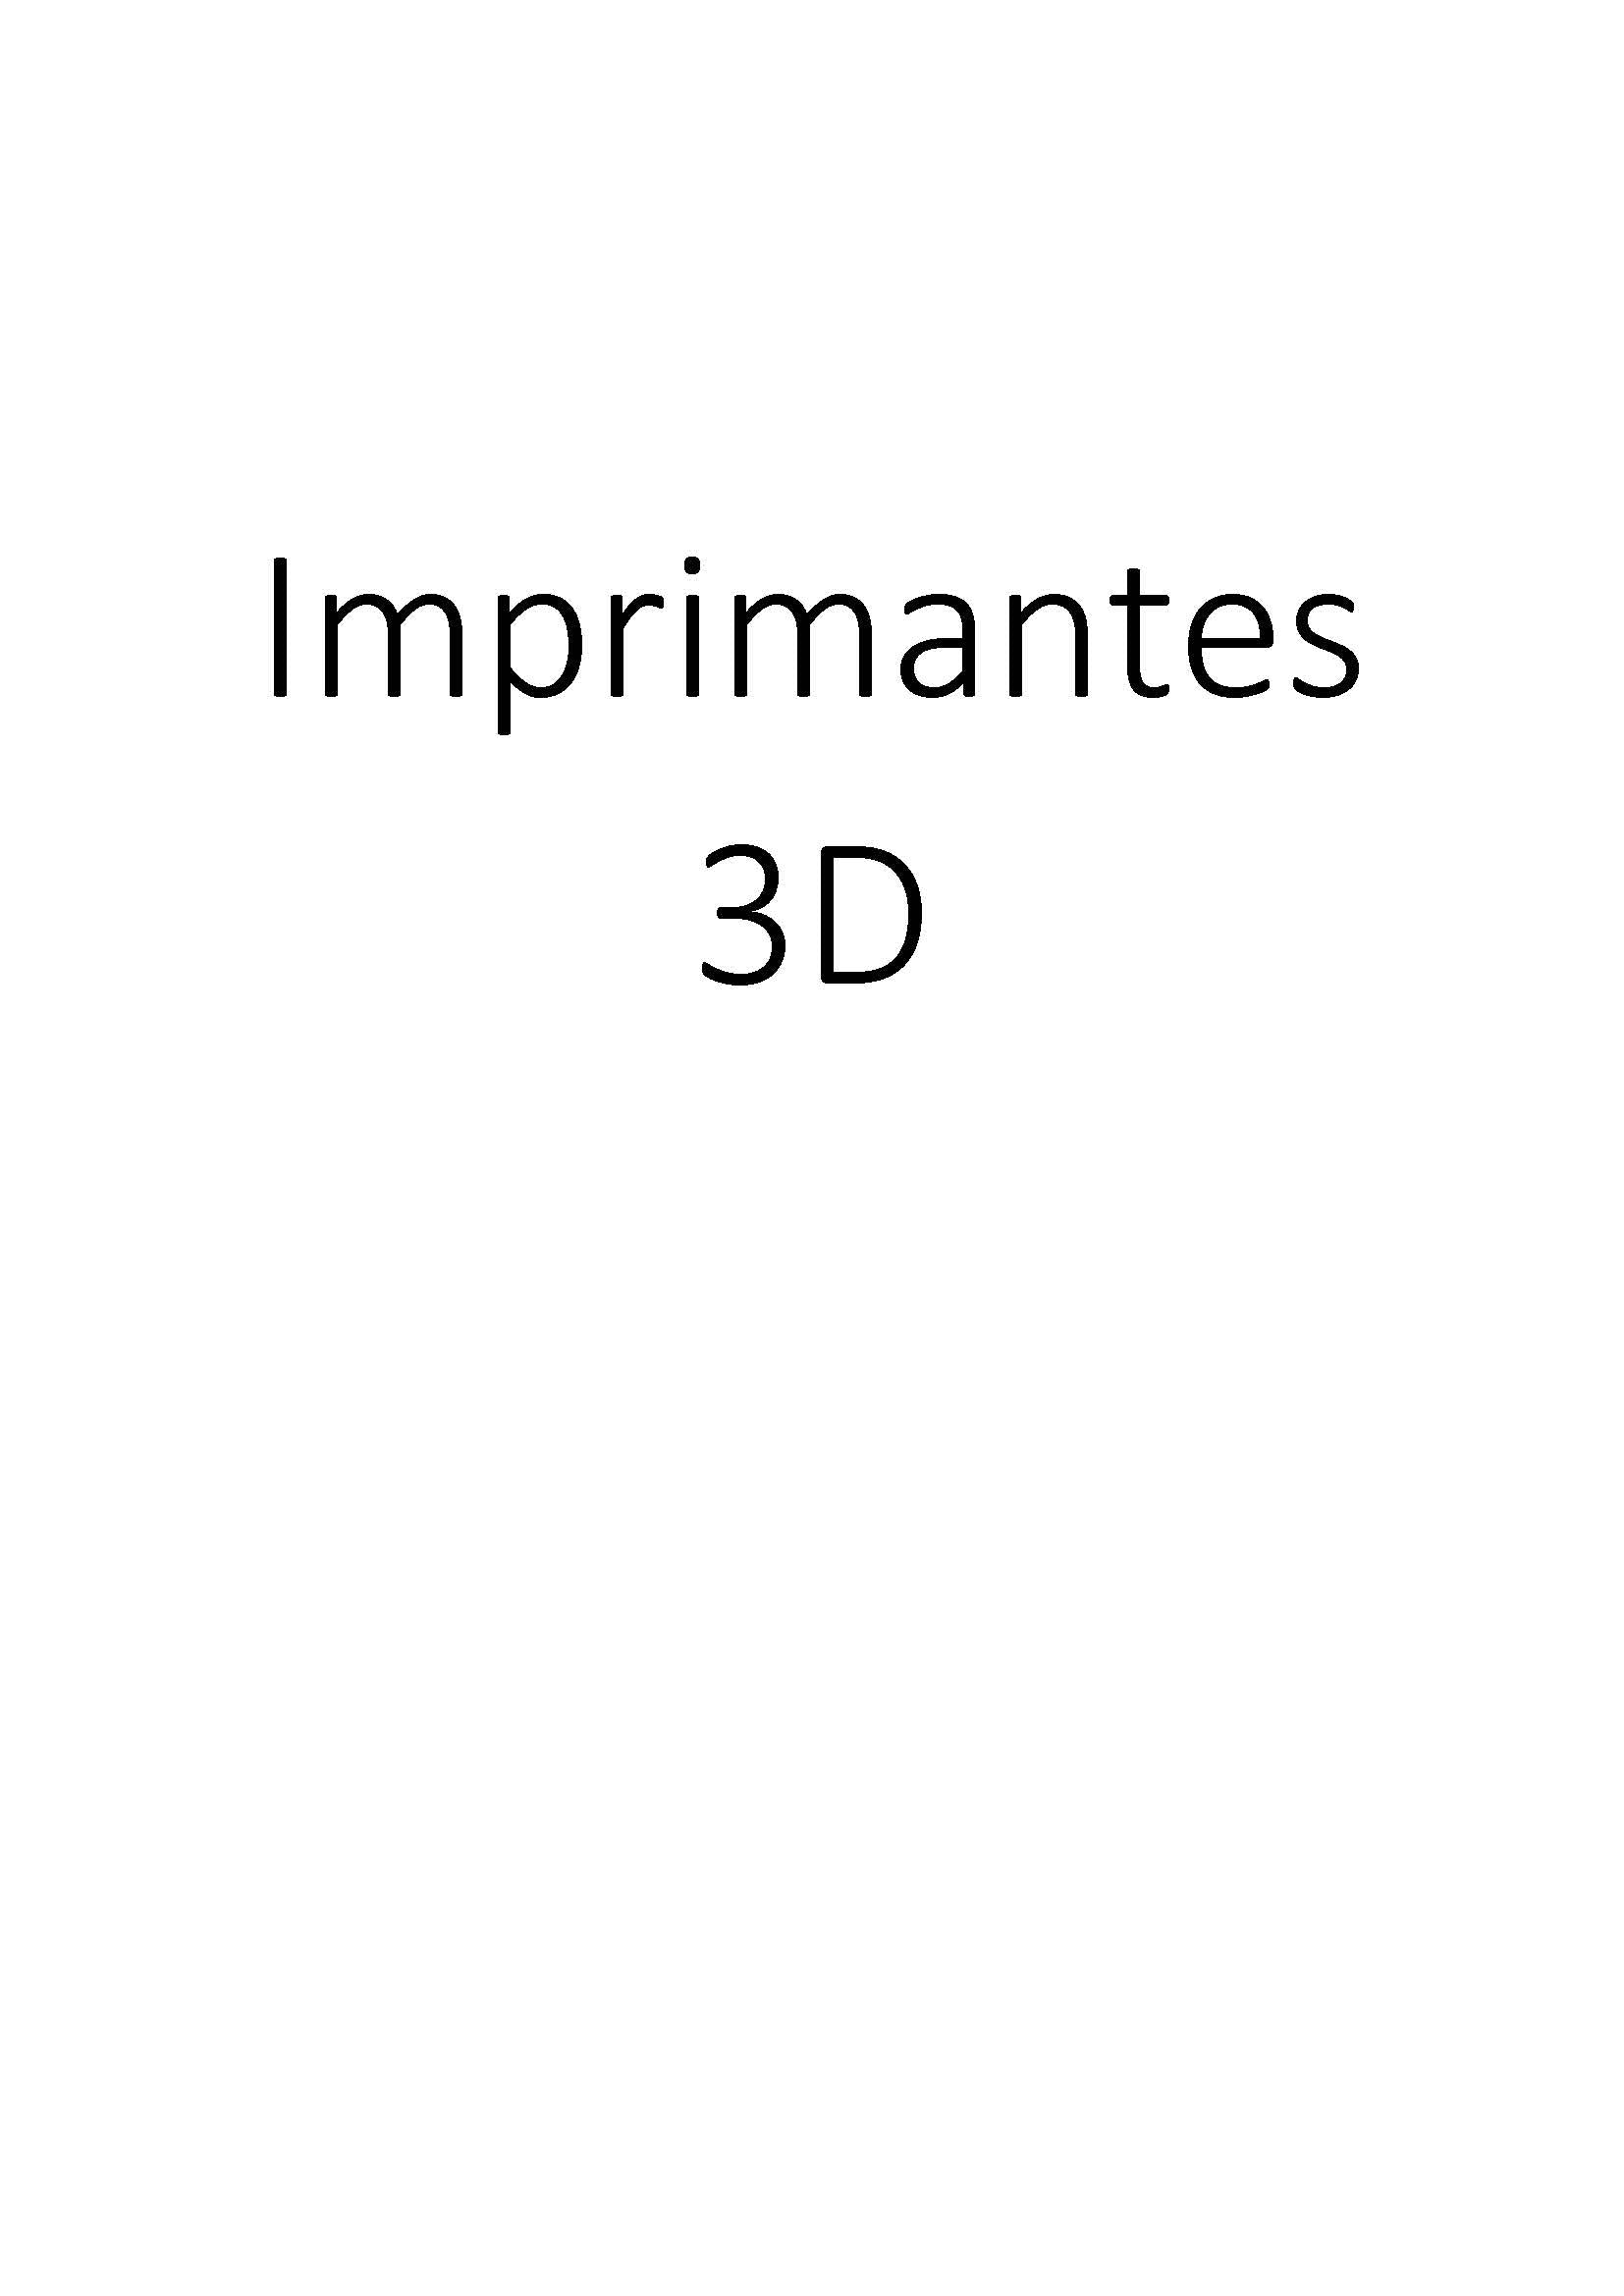 Imprimantes 3D clicktofournisseur.com